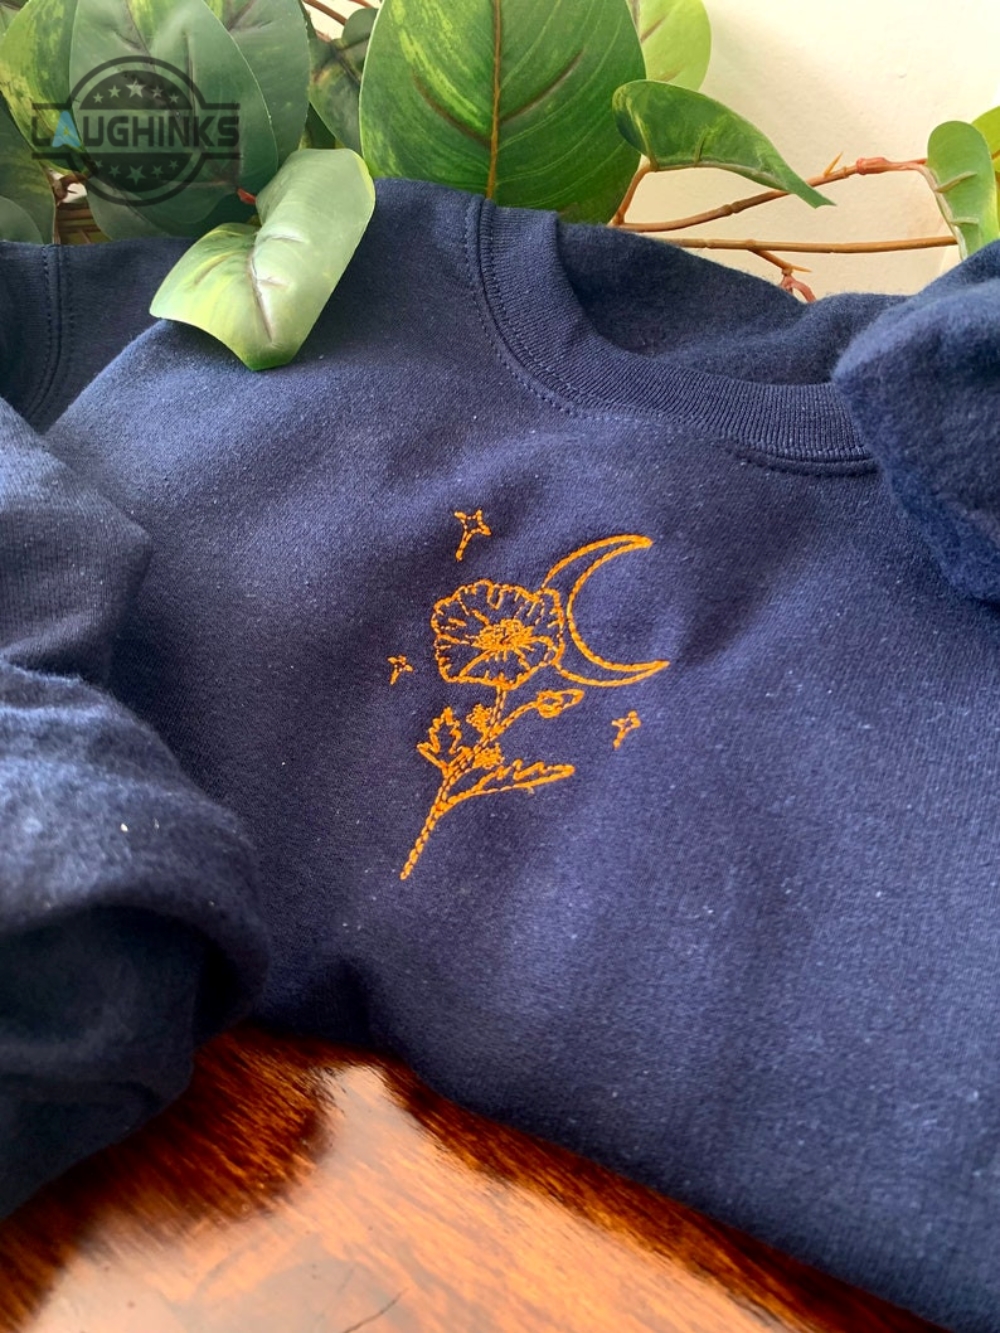 Birth Month Flower Moon Embroidered Crewneck Embroidery Tshirt Sweatshirt Hoodie Gift